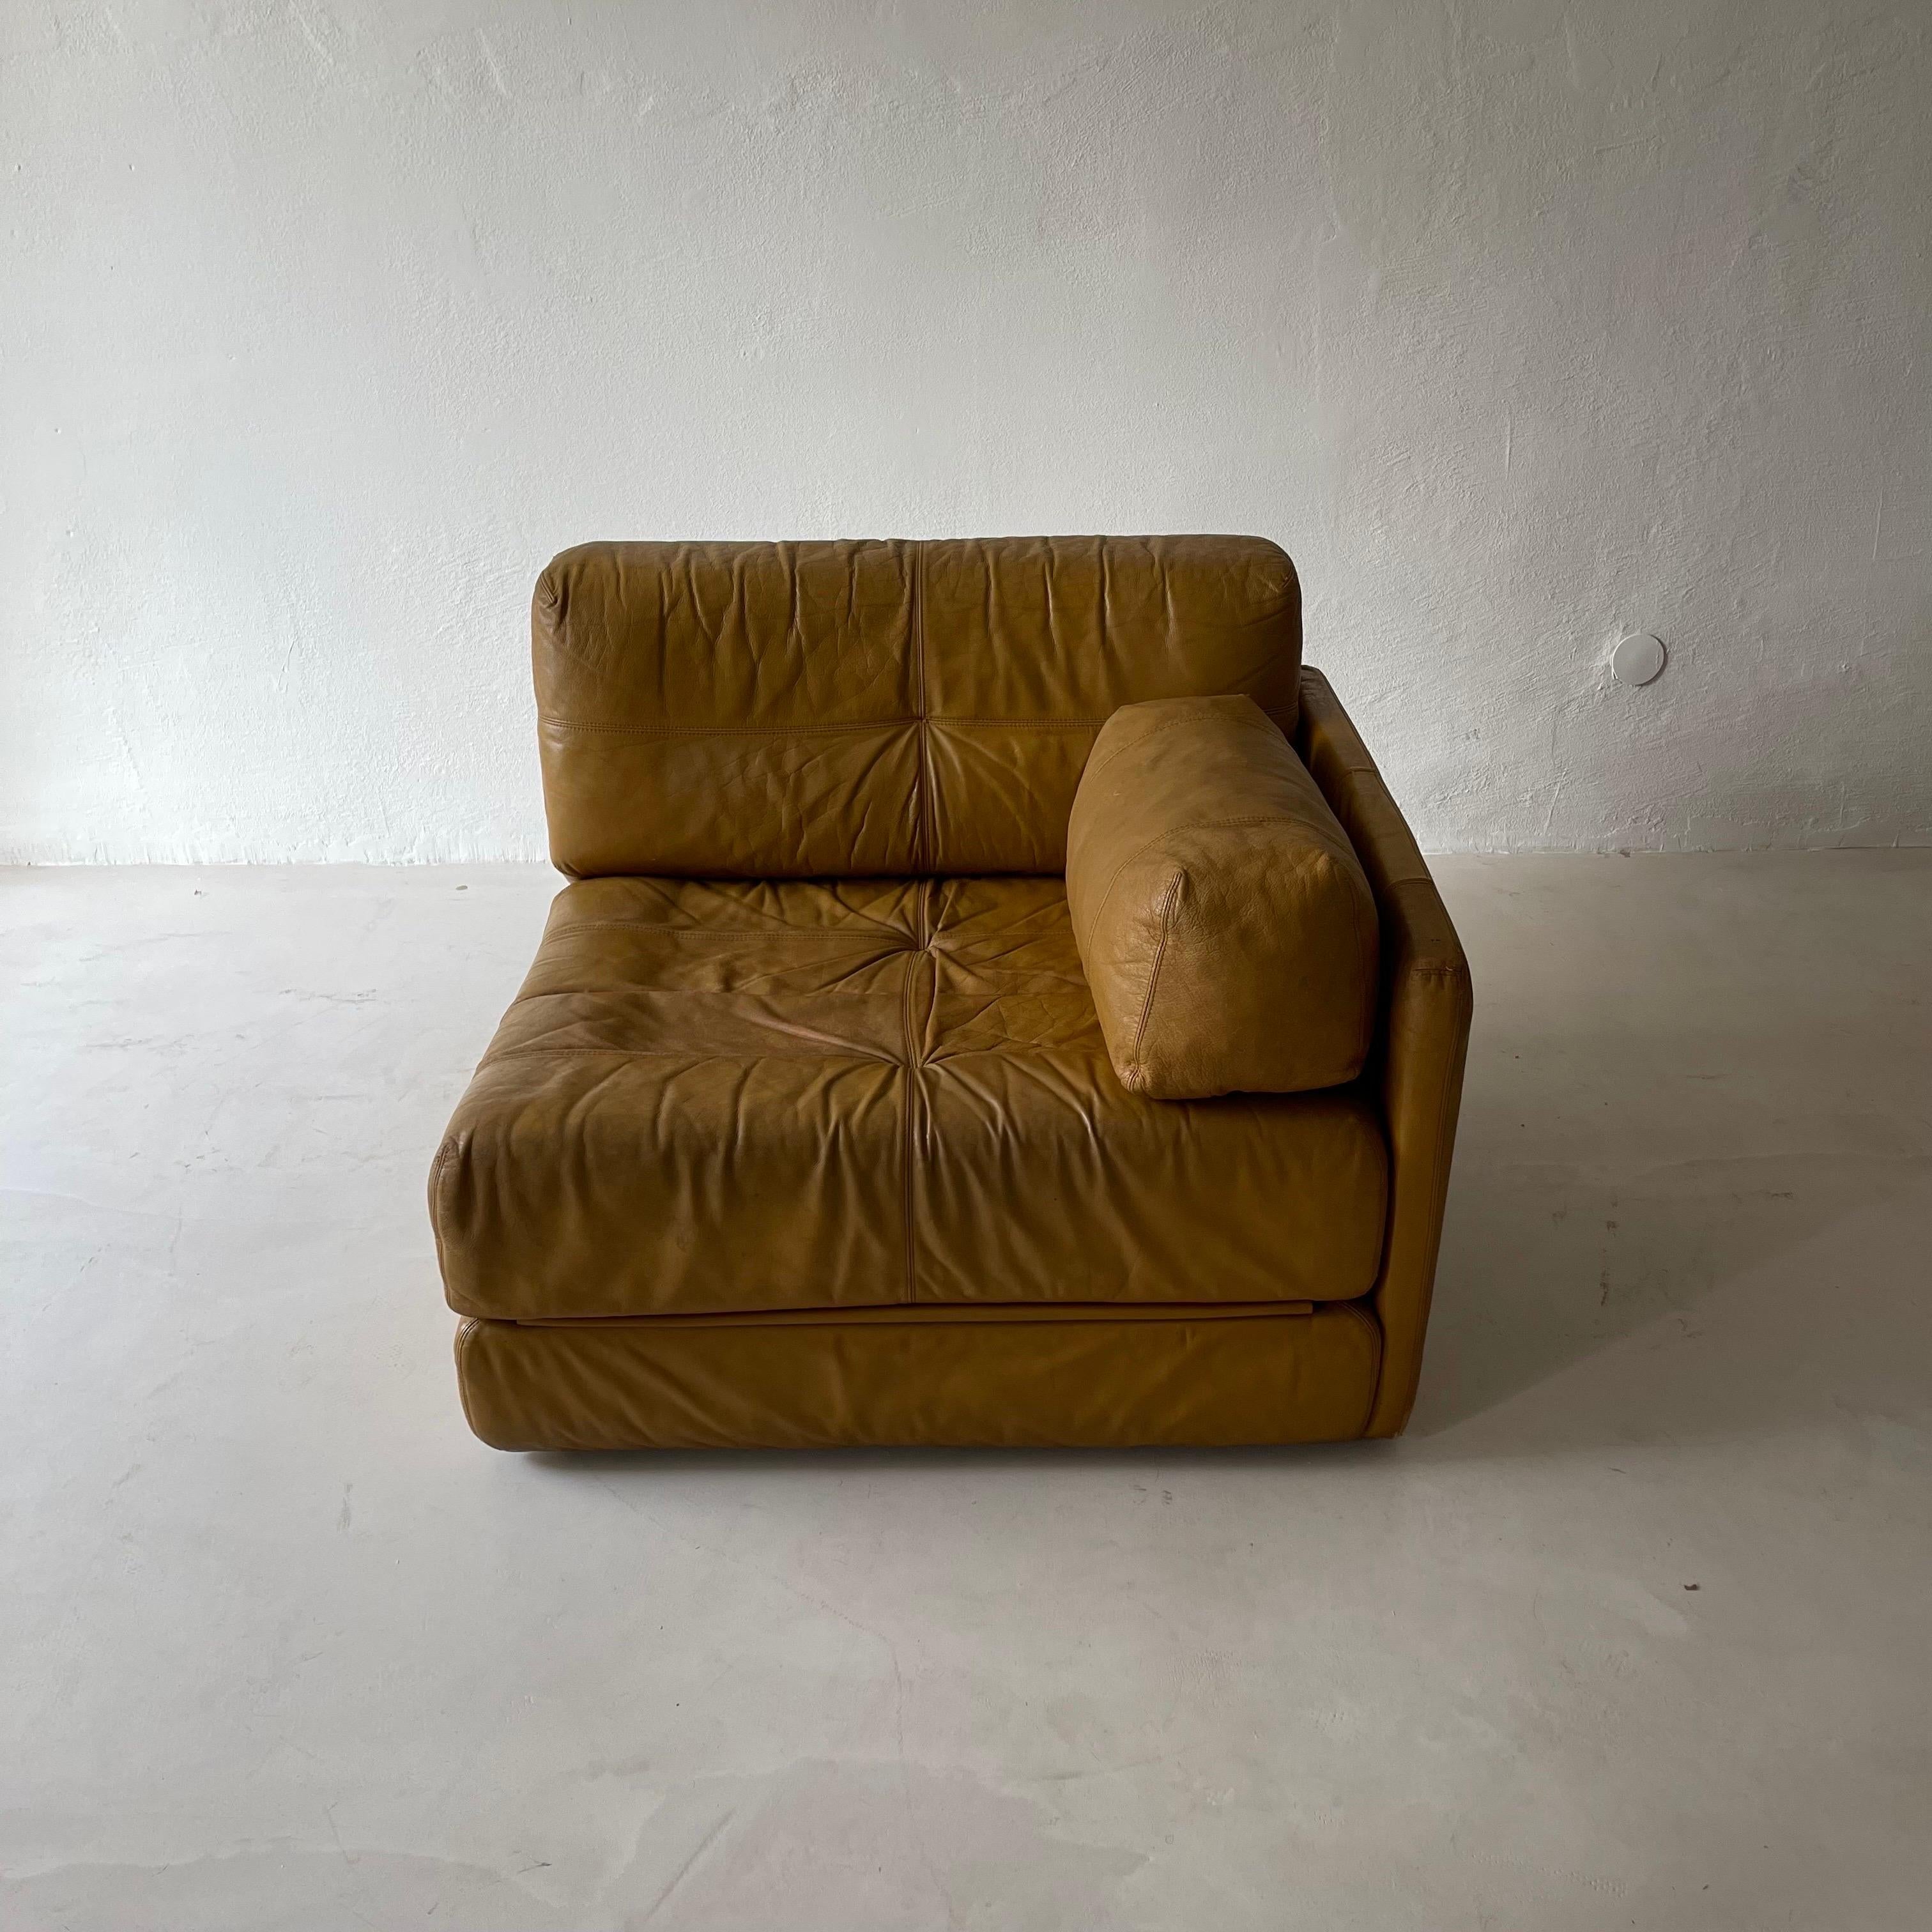 Wittmann Atrium Cognac Leather Pair Lounge Chairs, 1970s For Sale 1